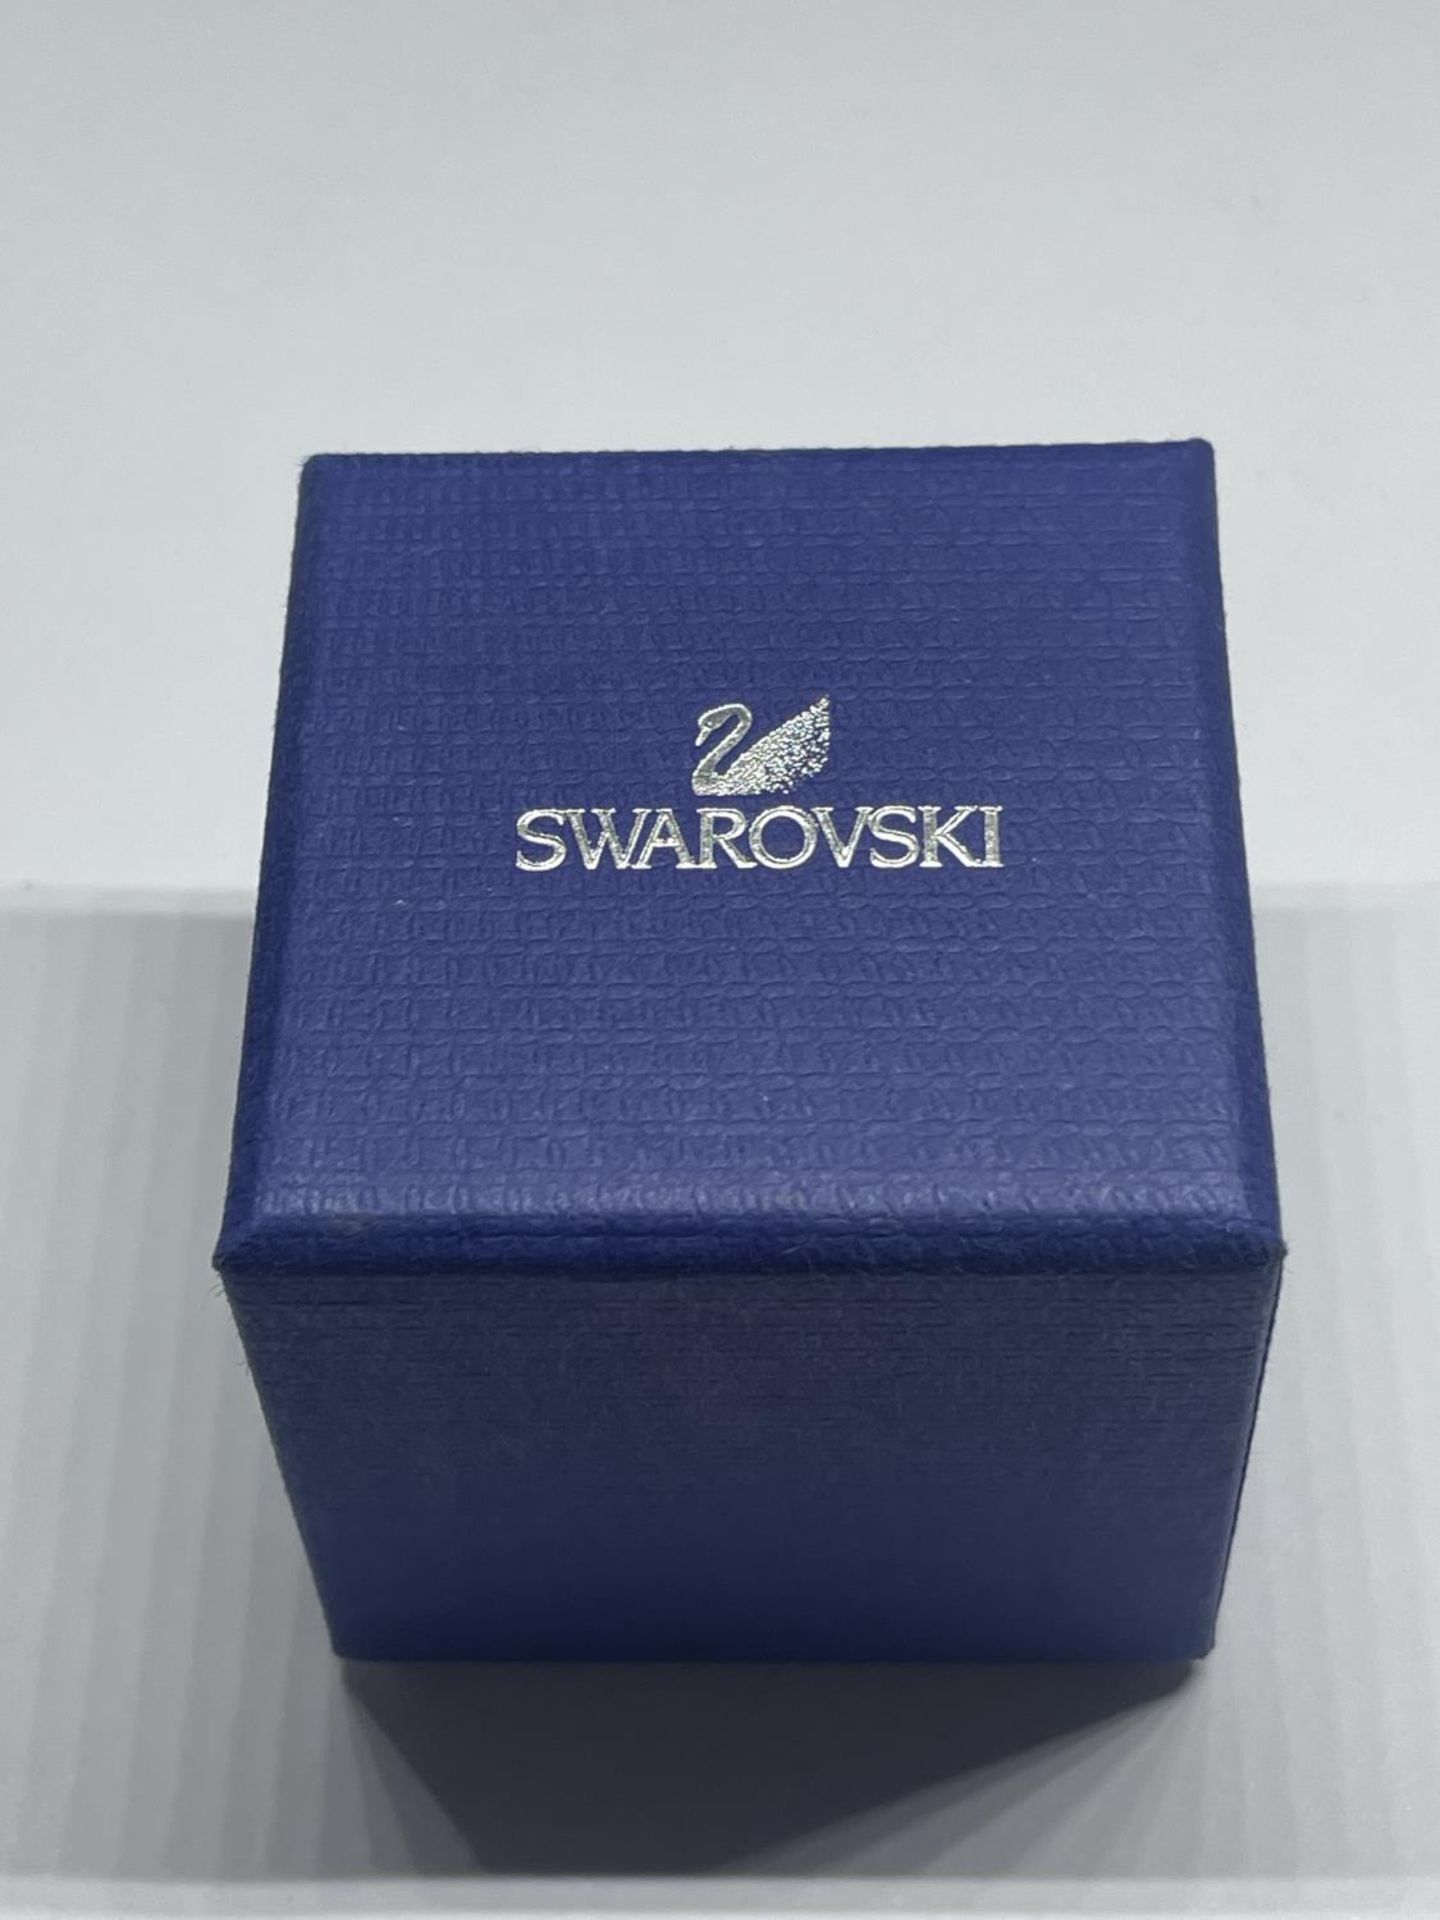 A SWAROVSKI CRYSTAL RING WITH LABEL, PRESENTATION BOX SIZE N - Image 3 of 3